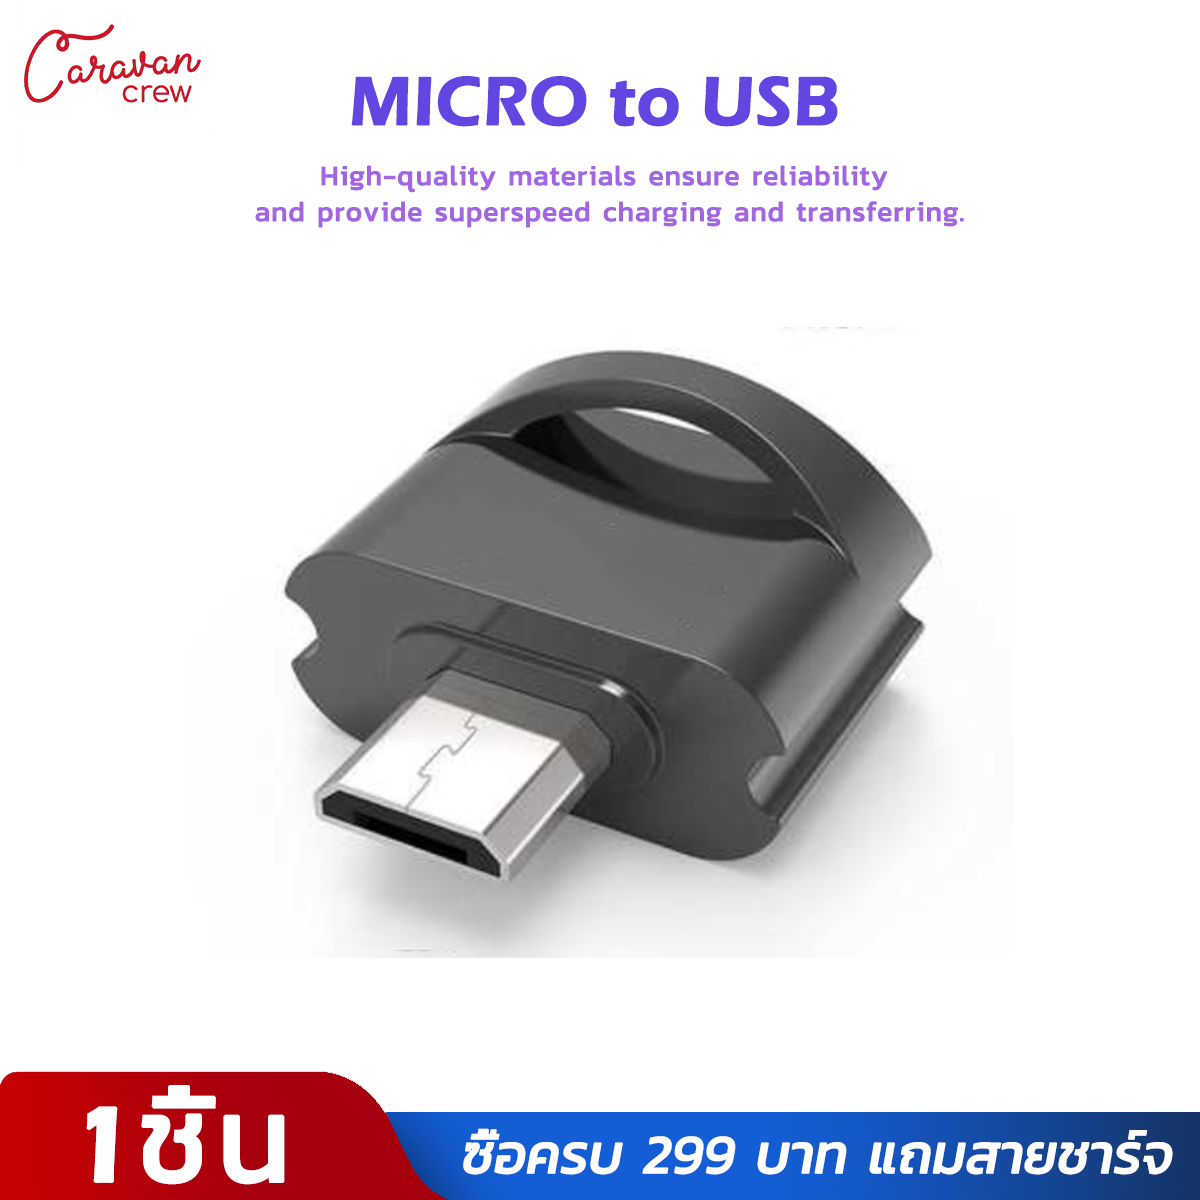 Micro to USB OTG USB-A Caravan Crew โทรศัพท์ Android รีโมทคอนโทรล